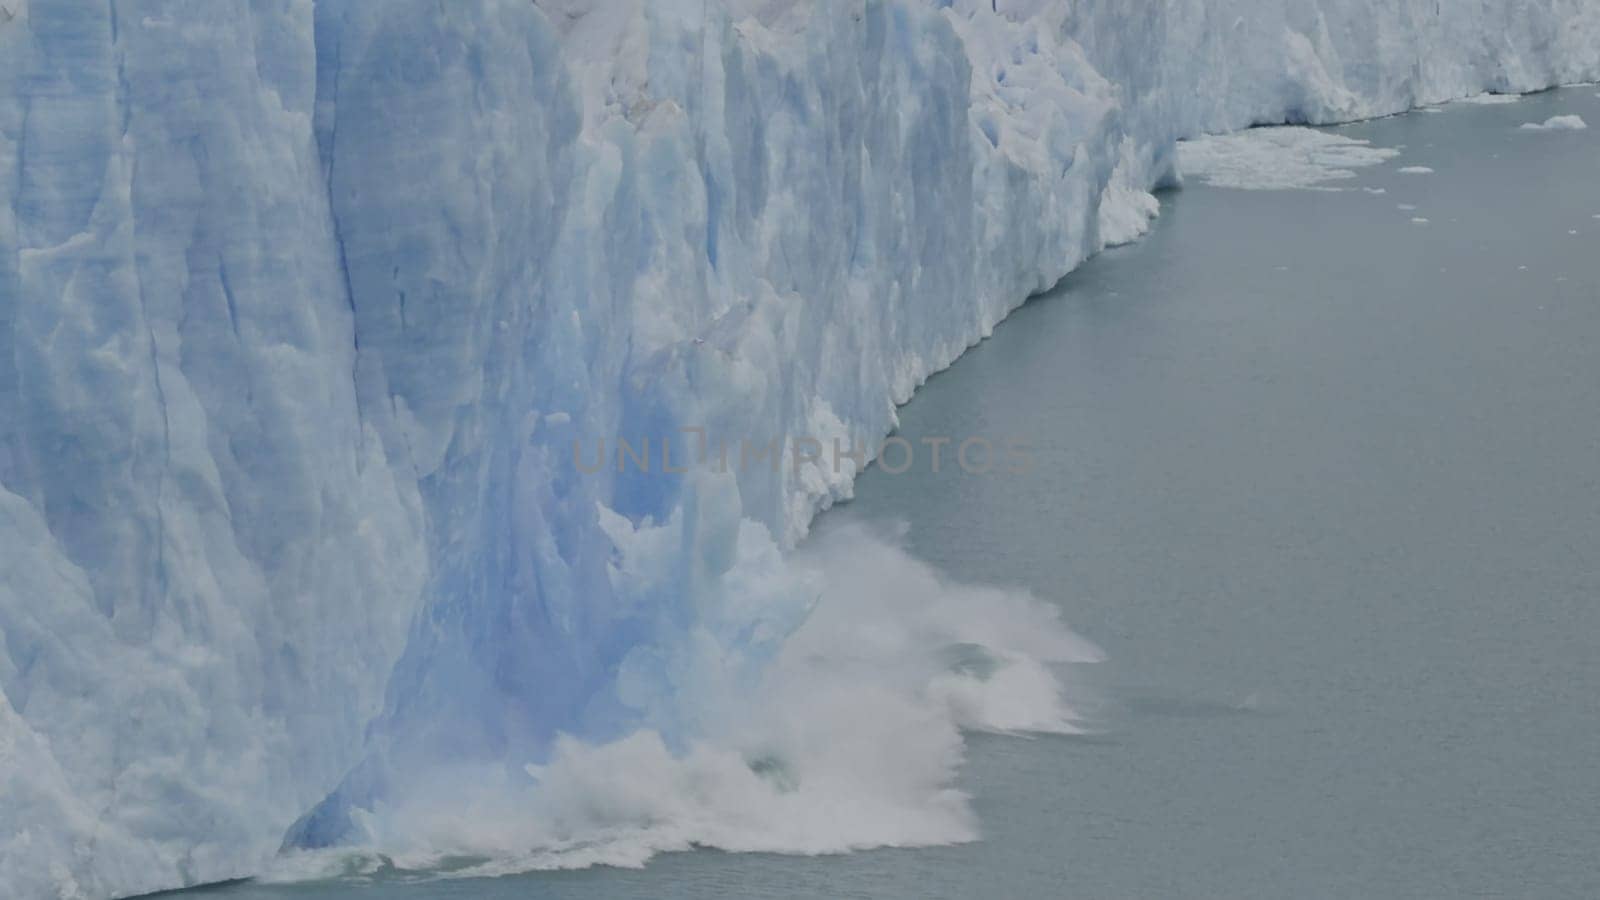 Captivating slow-mo video shows Perito Moreno Glacier's ice calving into a lake.